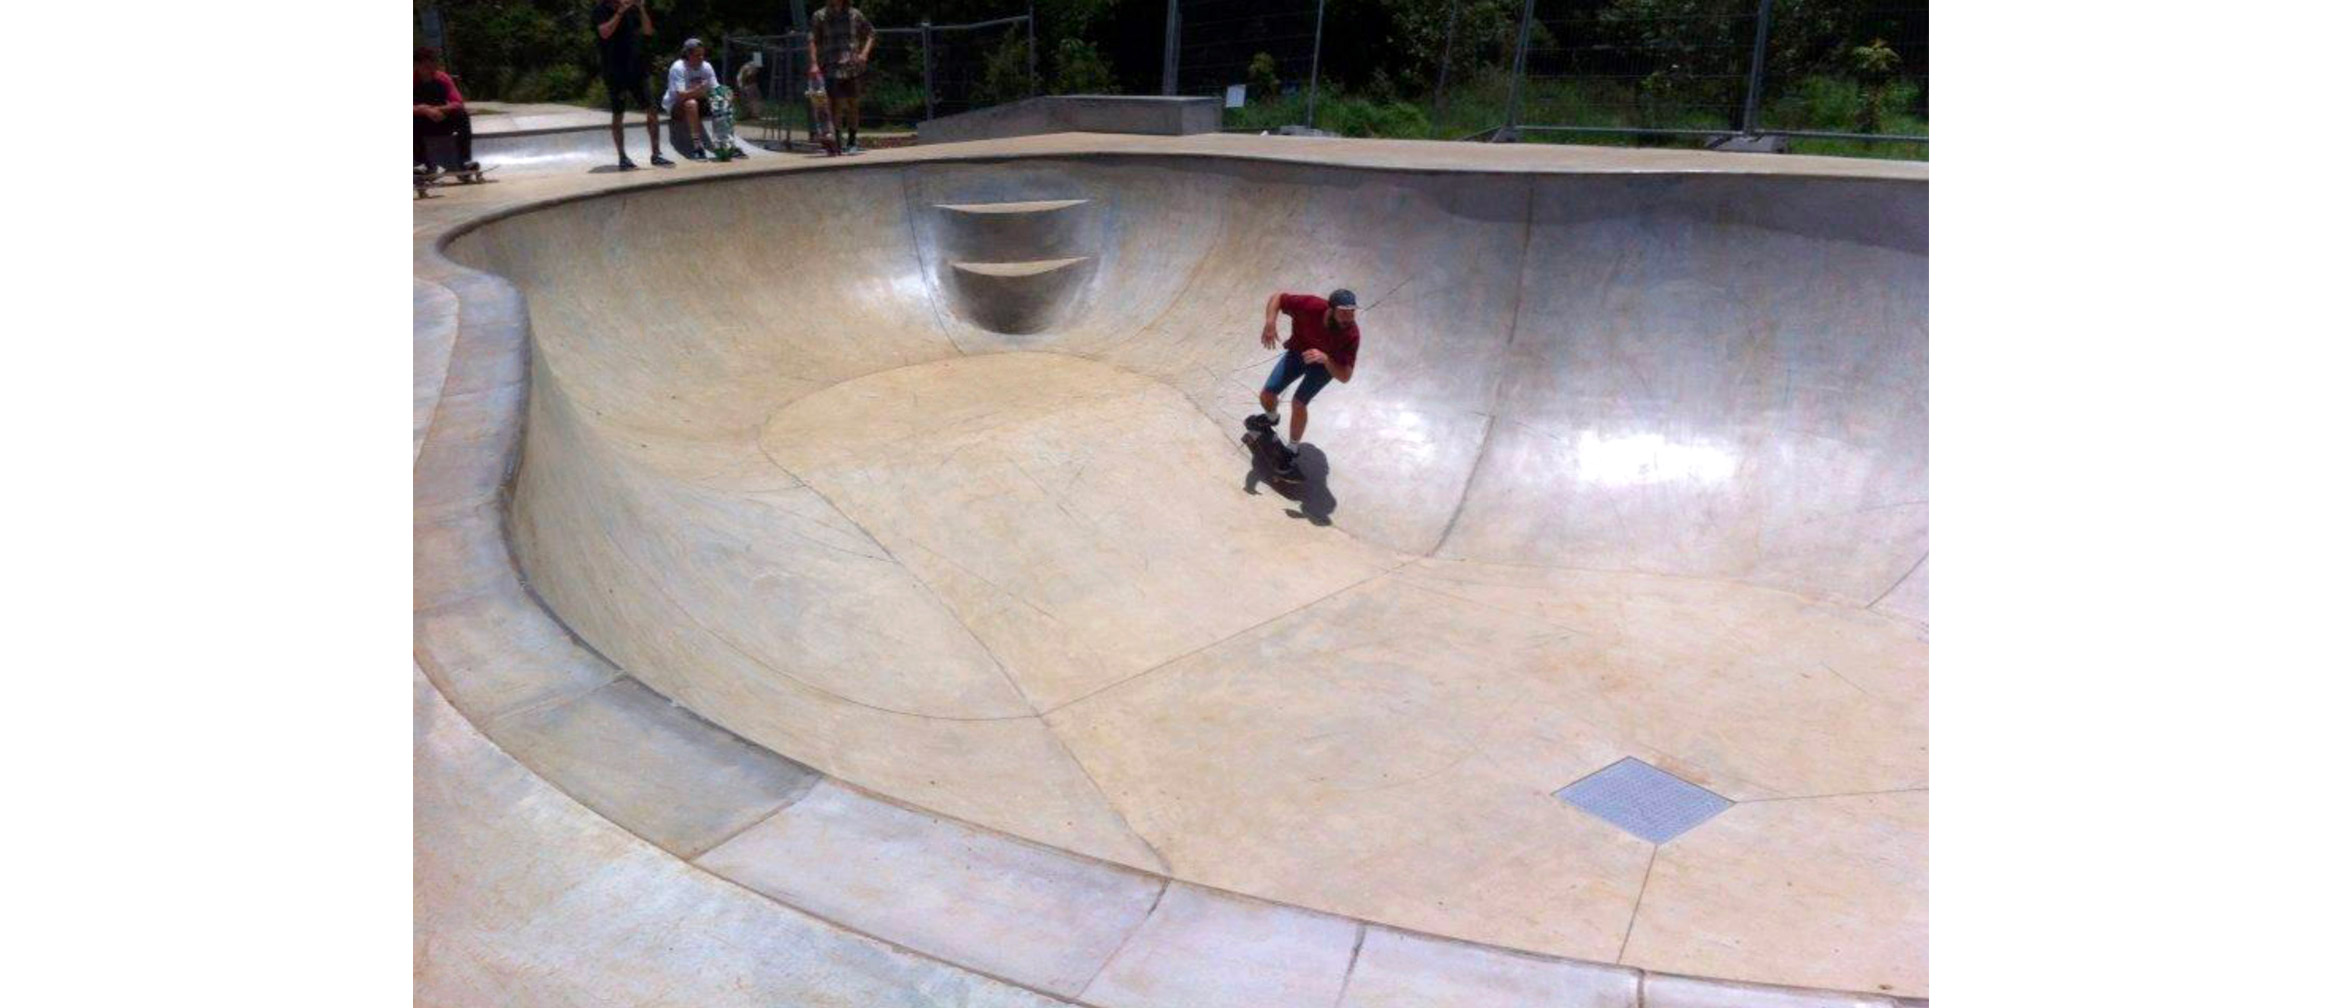 Bangalow skate park, Concrete Skateparks